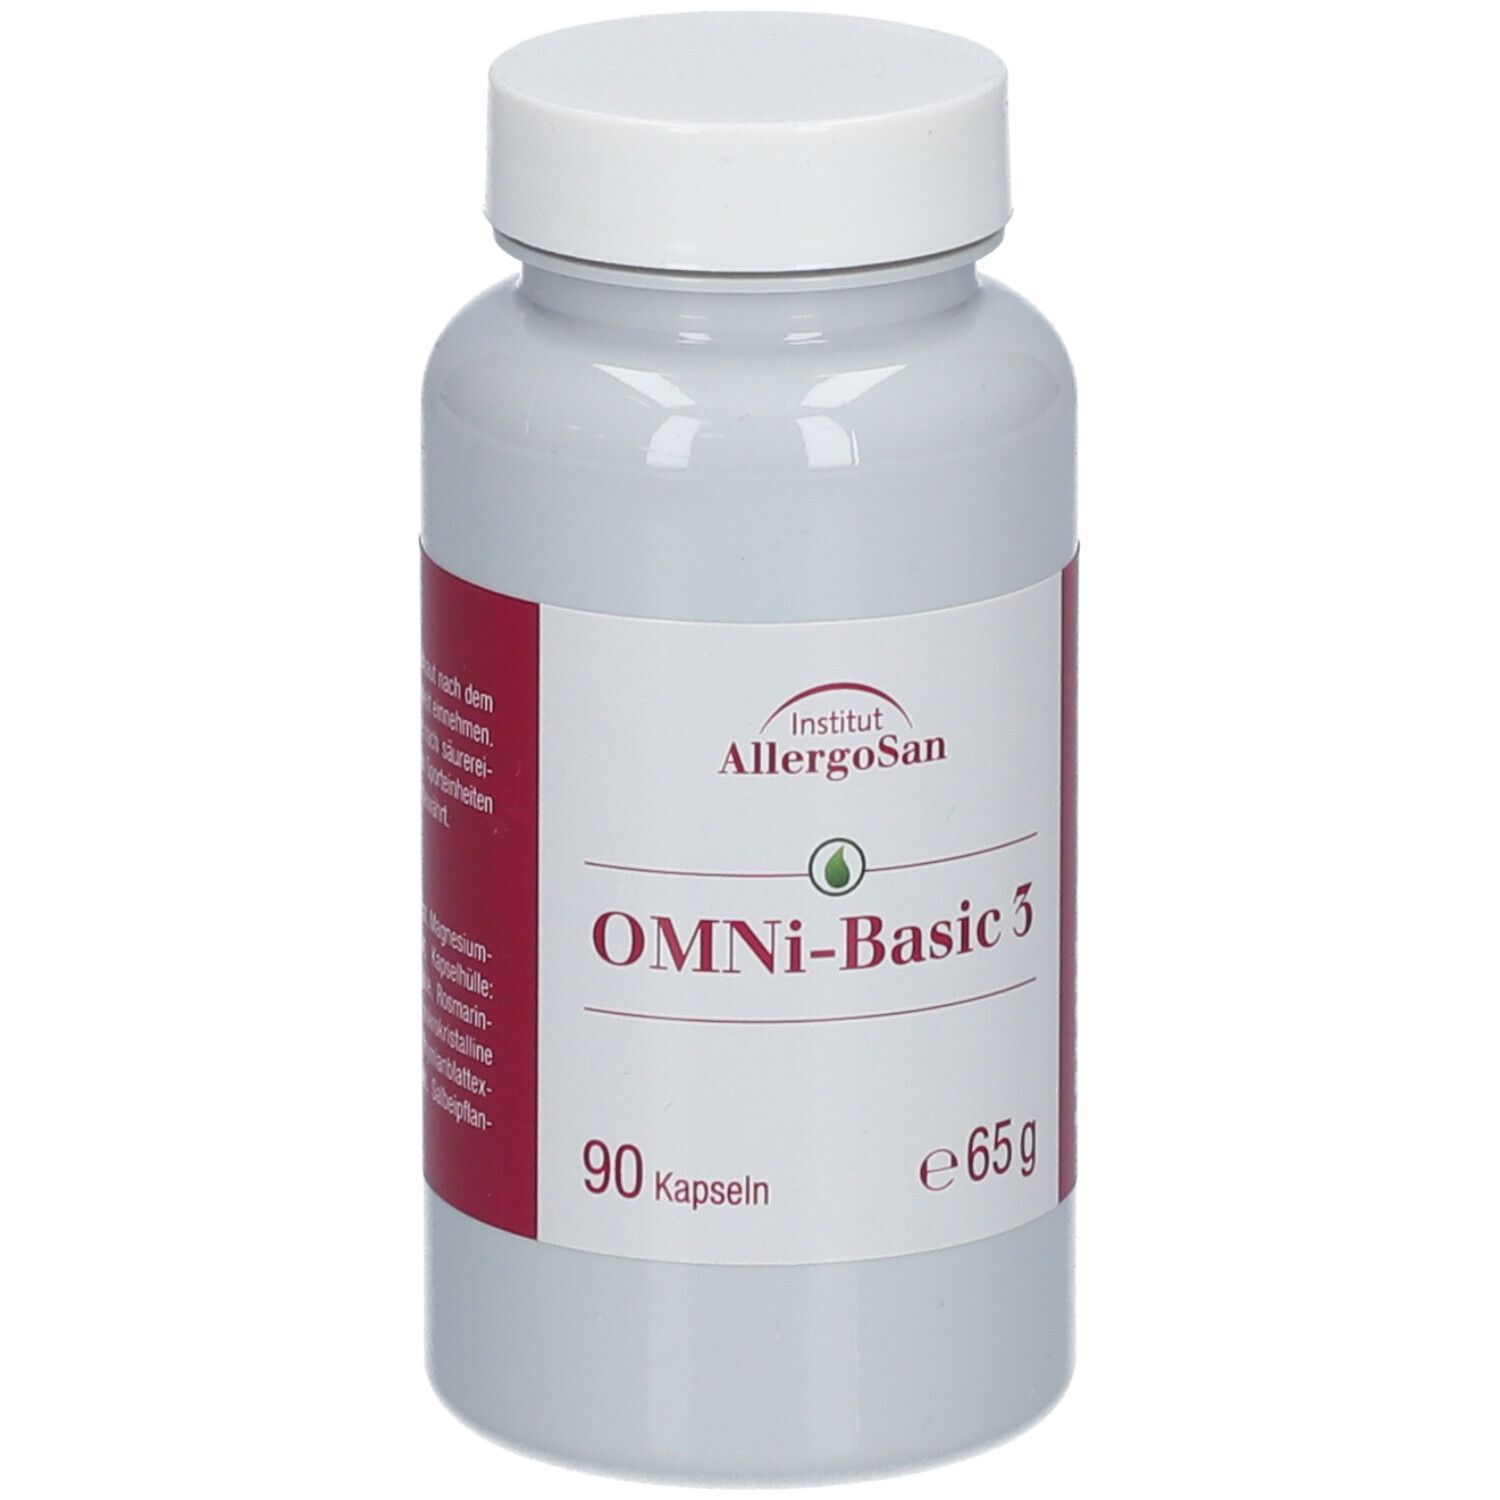 OMNi-Basic 3